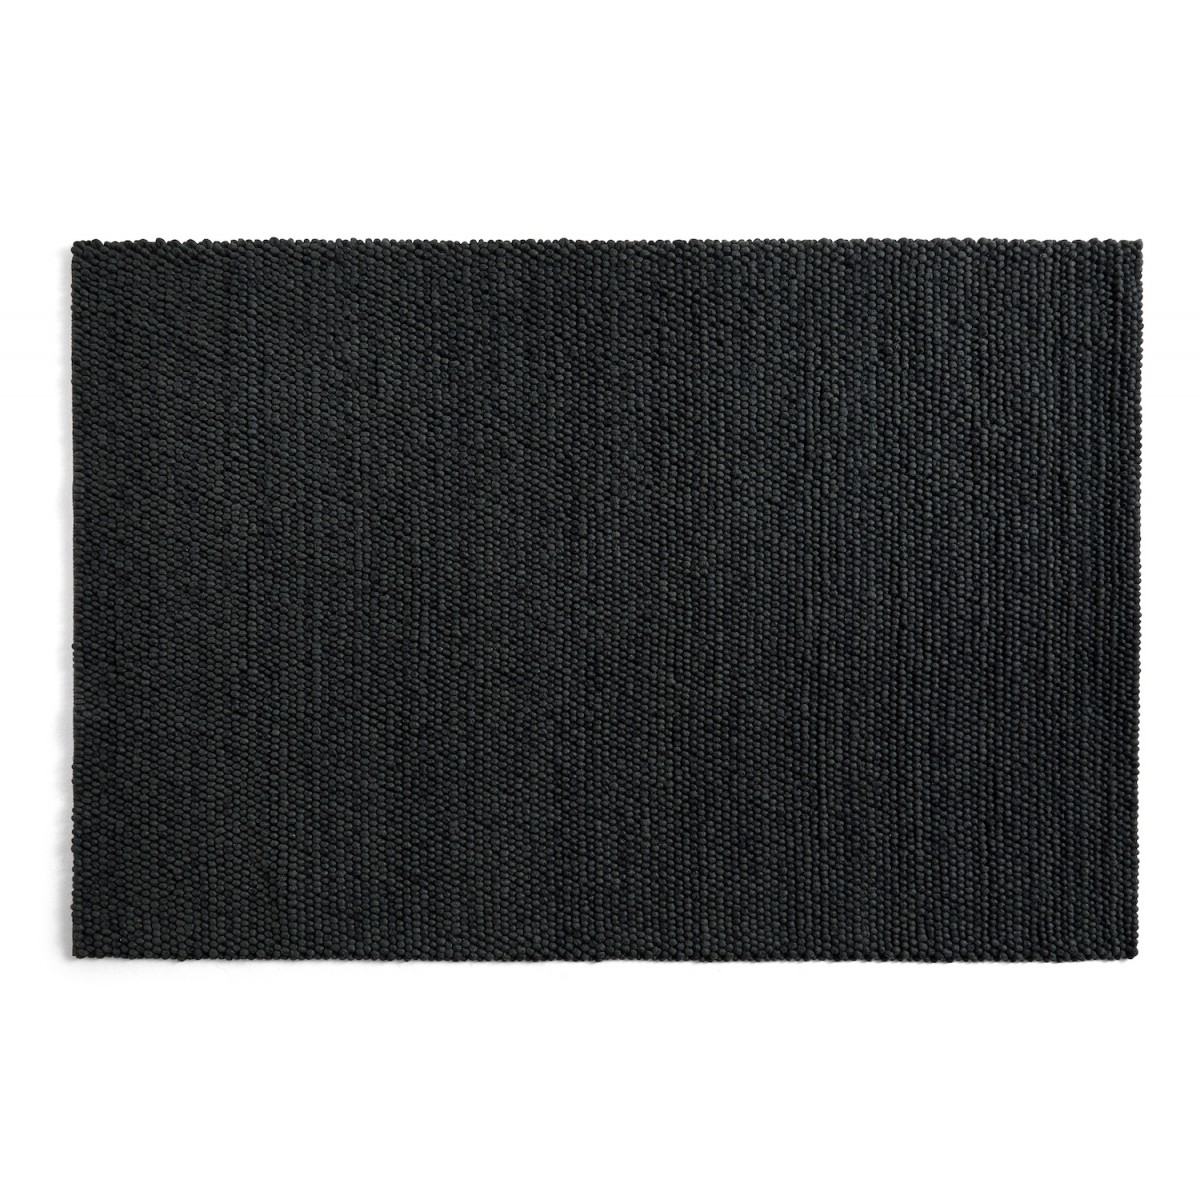 140x200cm - dark green - Peas rug